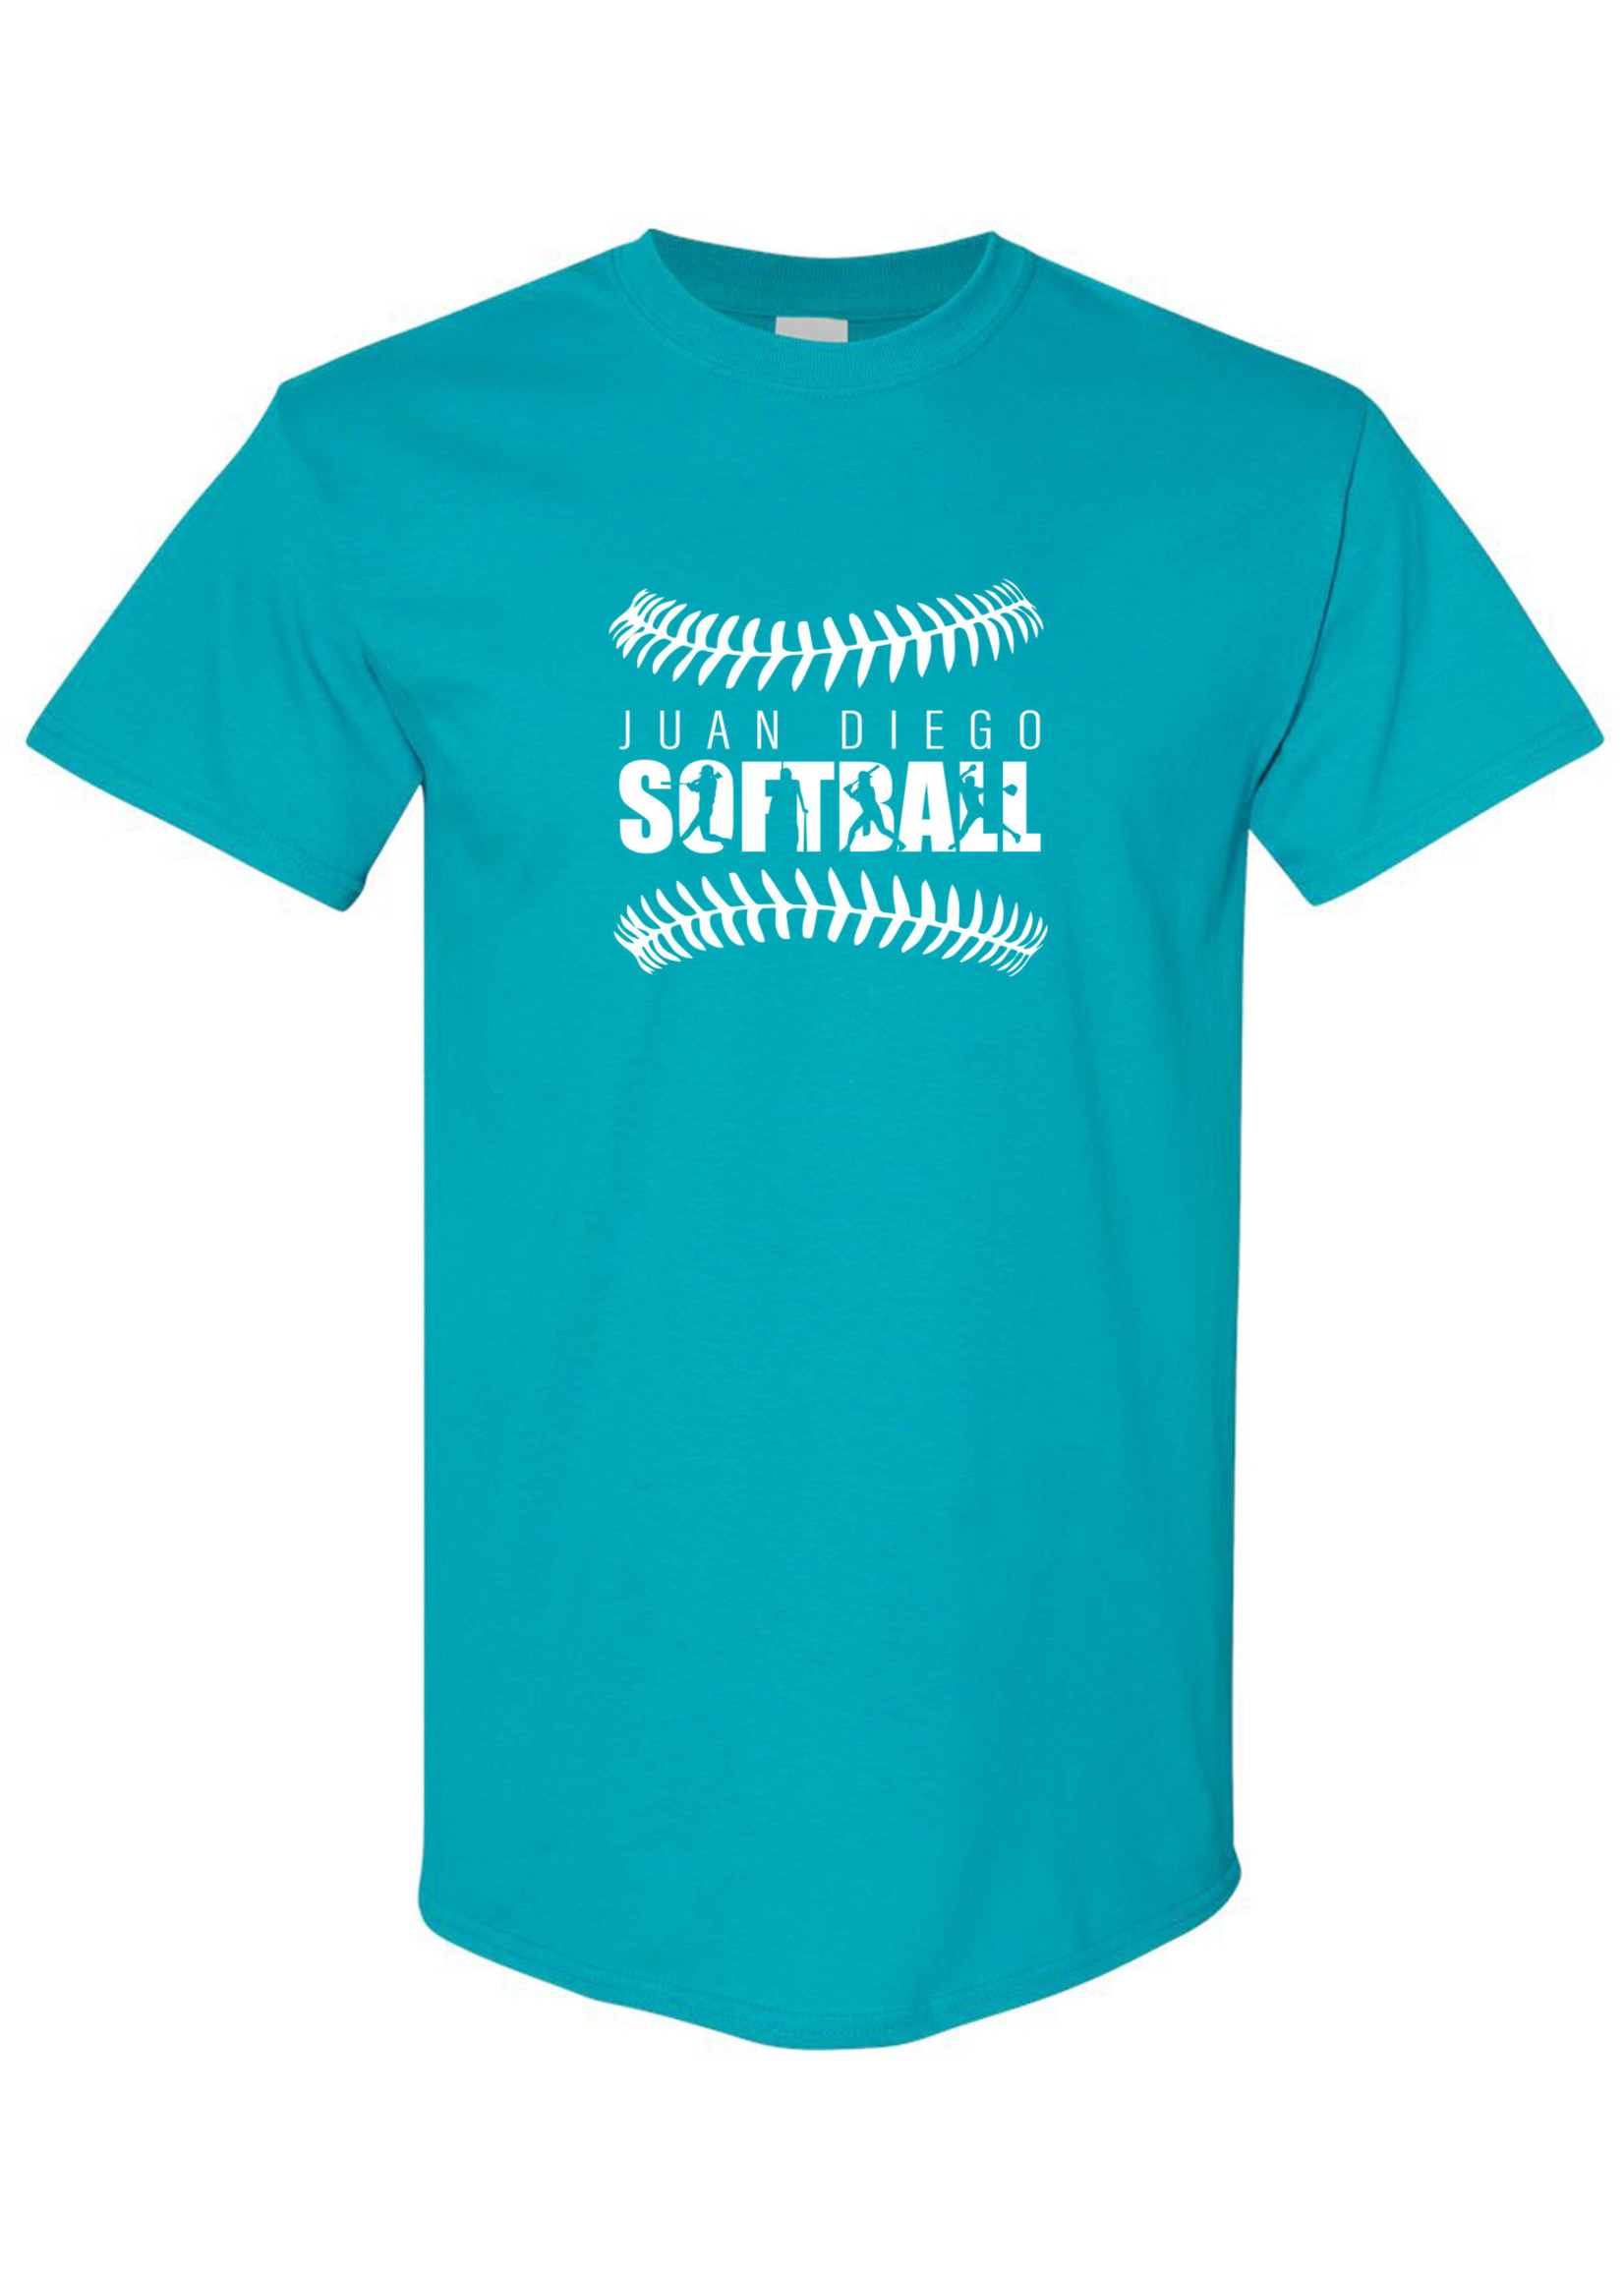 NON-UNIFORM JD Softball Spirit T-Shirt, Unisex